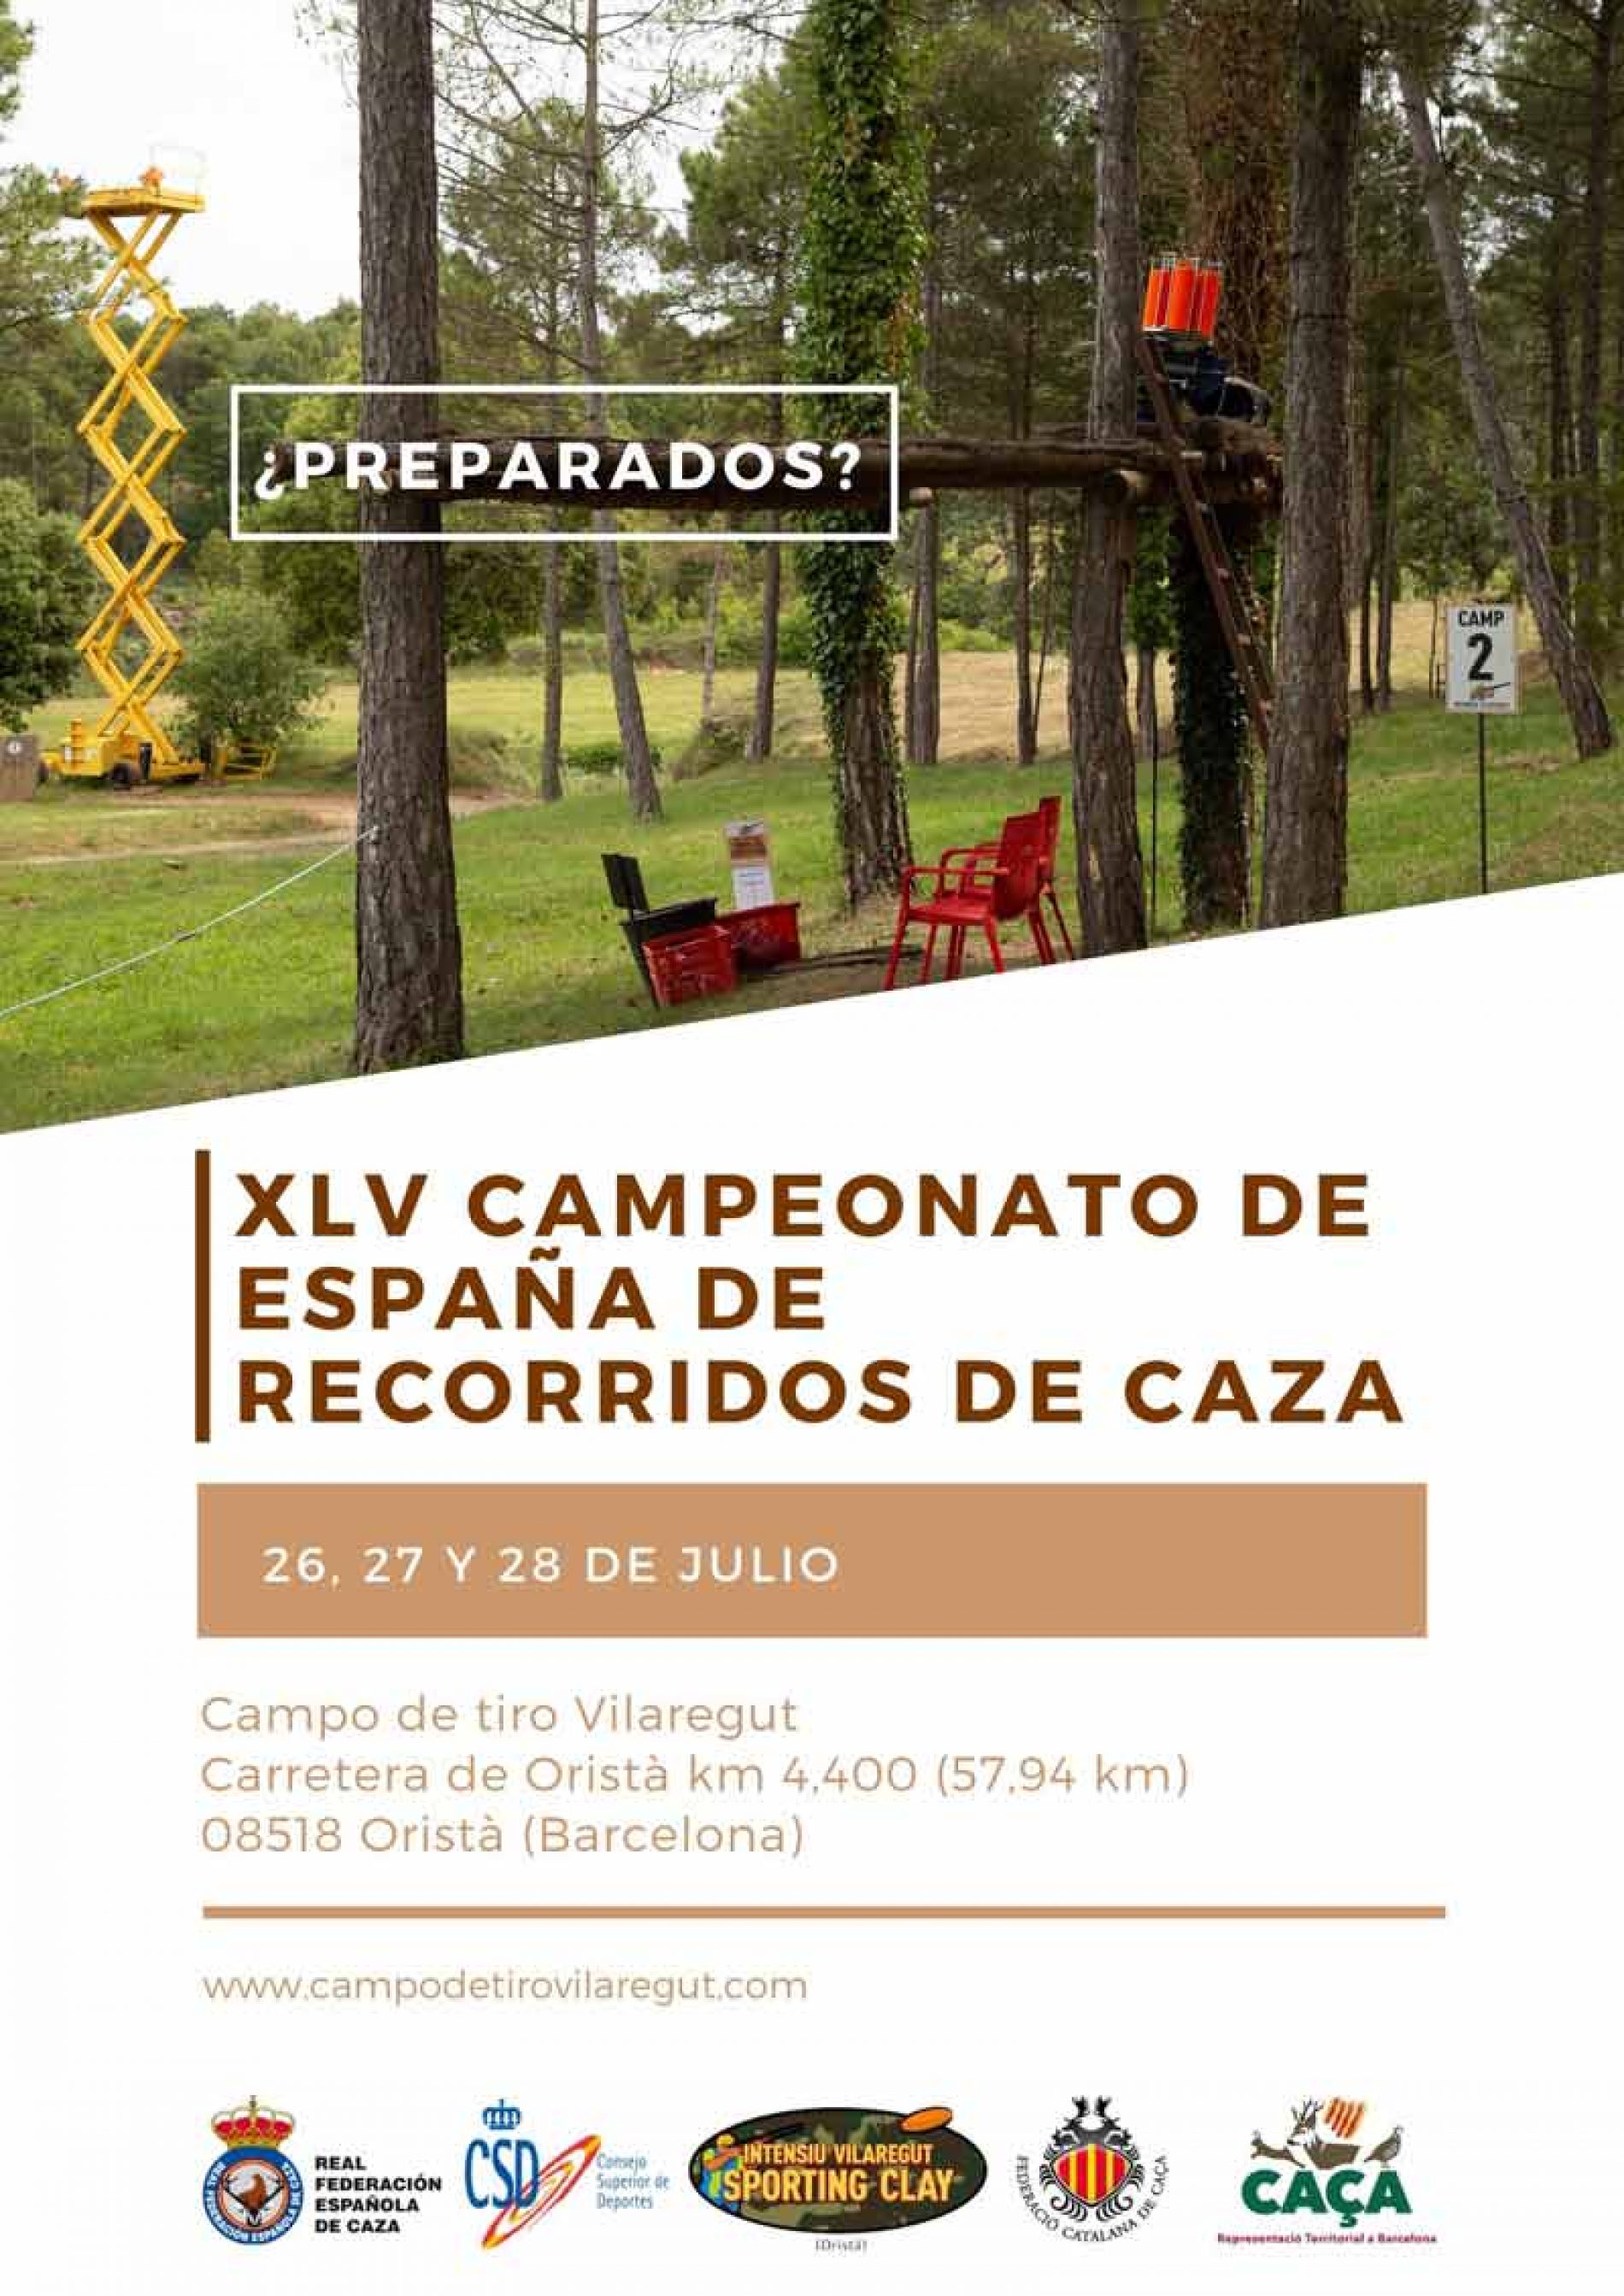 El XLV Campeonato de España de Recorridos de Caza se celebrará en Oristá